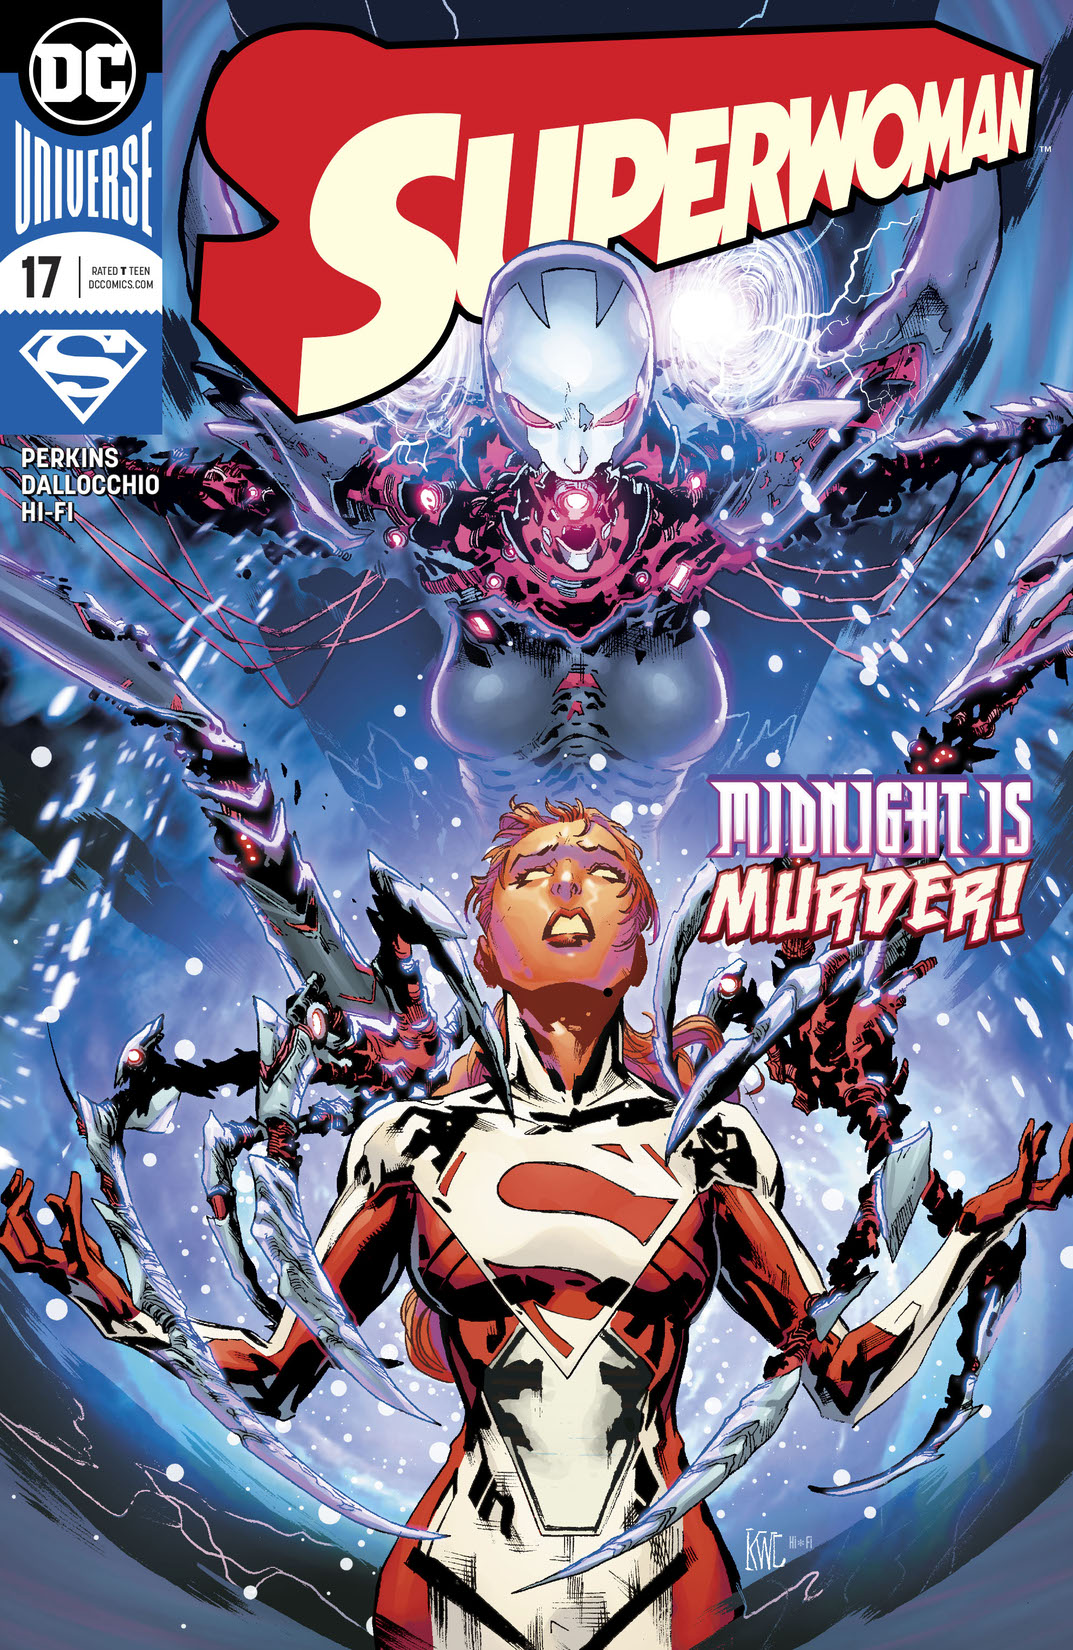 Superwoman #17 preview images